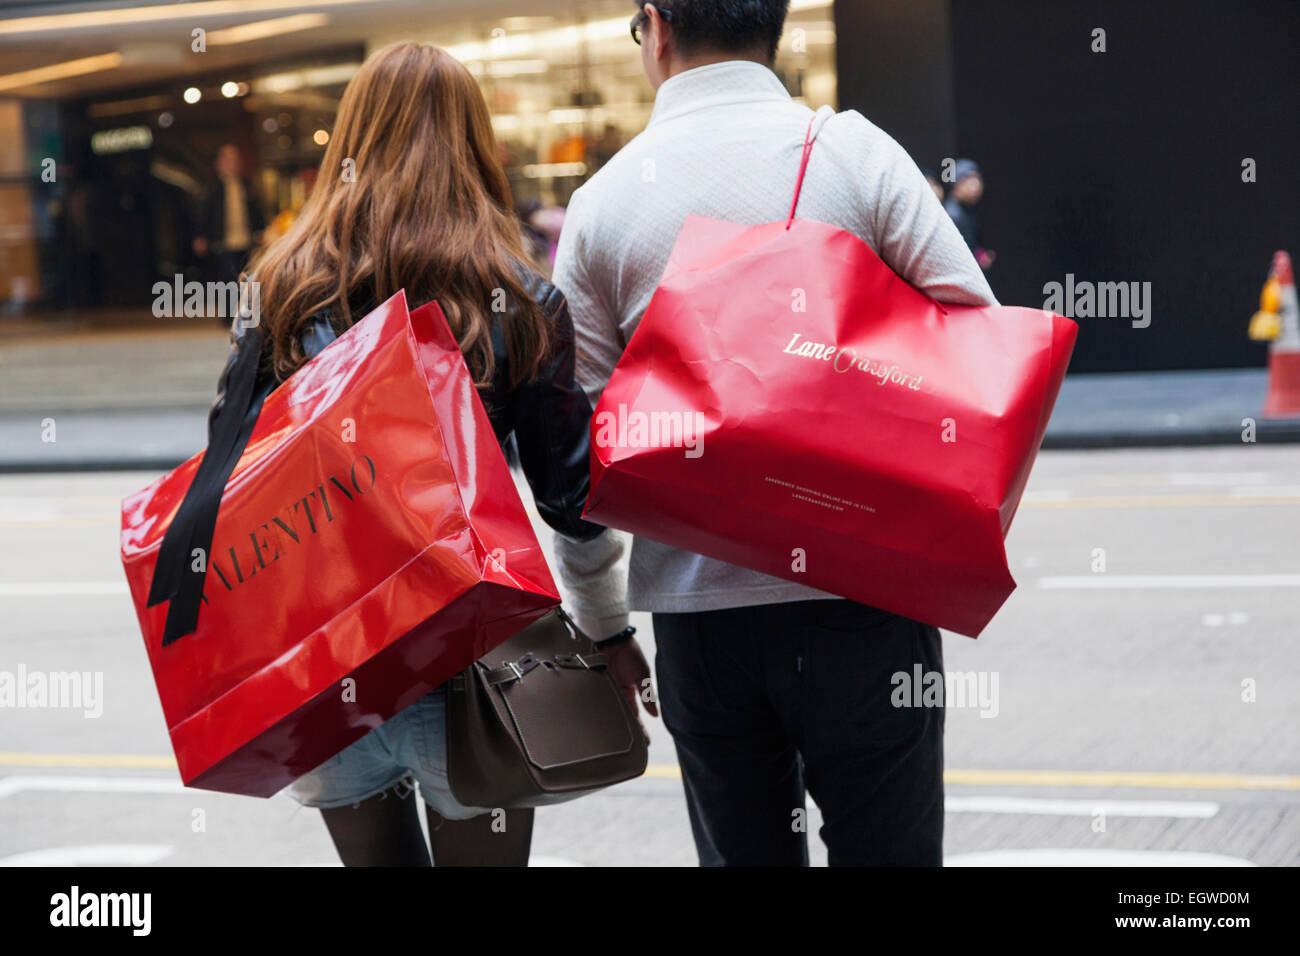 China, Hong Kong, Central, Couple Carrying Valentino and Lane Crawford Shopping Bags Stock Photo